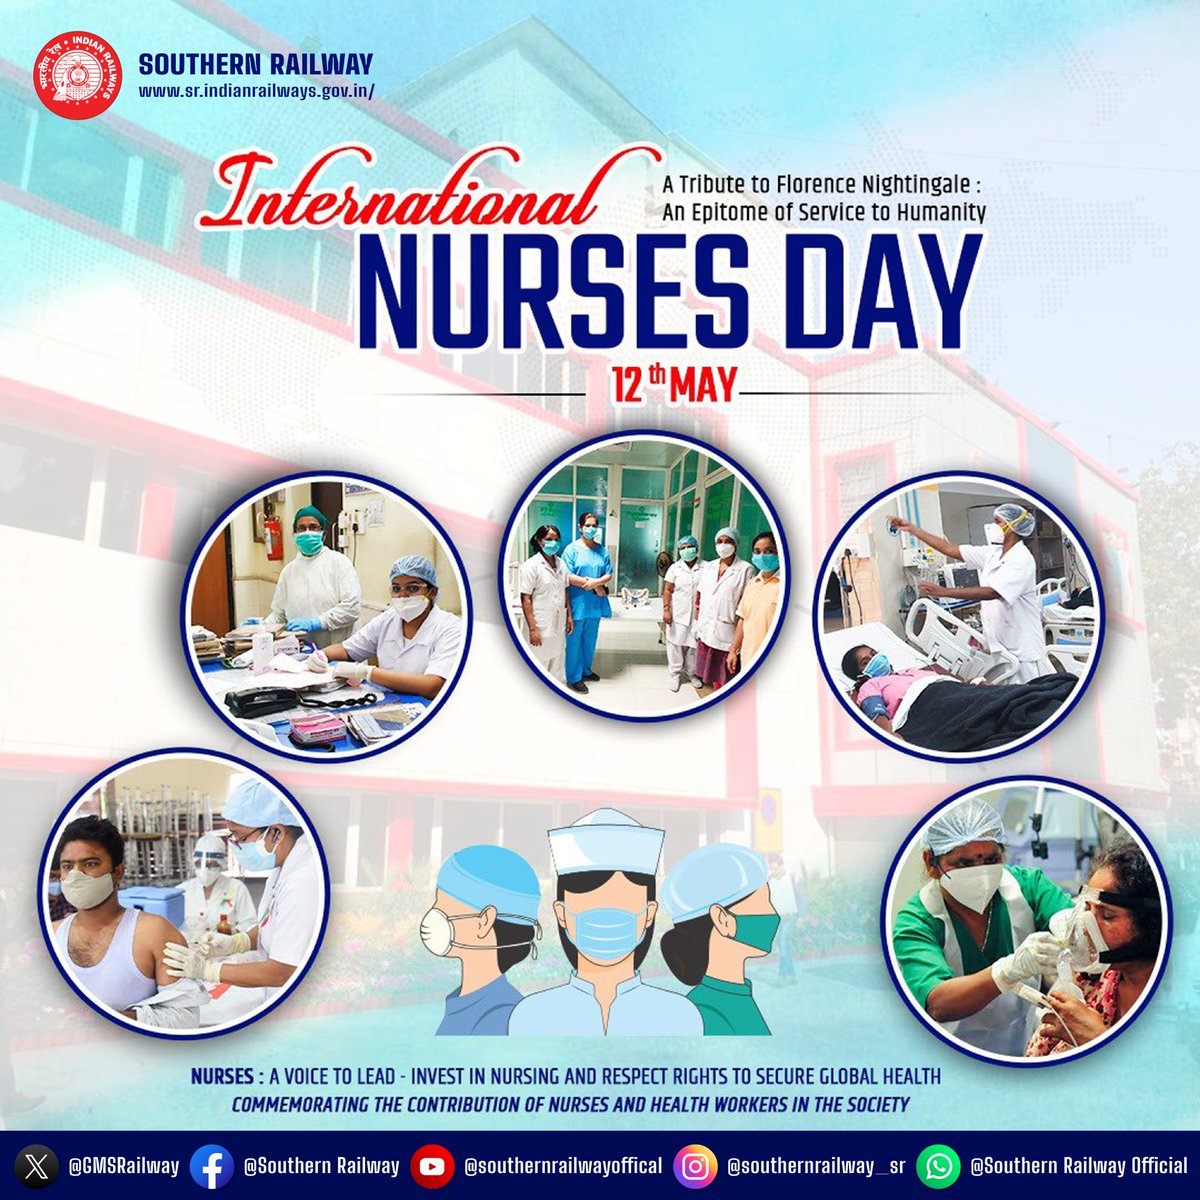 Honoring Florence Nightingale & all nurses on #InternationalNursesDay! They are the backbone of healthcare, providing compassionate care & saving lives. #NursesForTheFuture #SouthernRailway